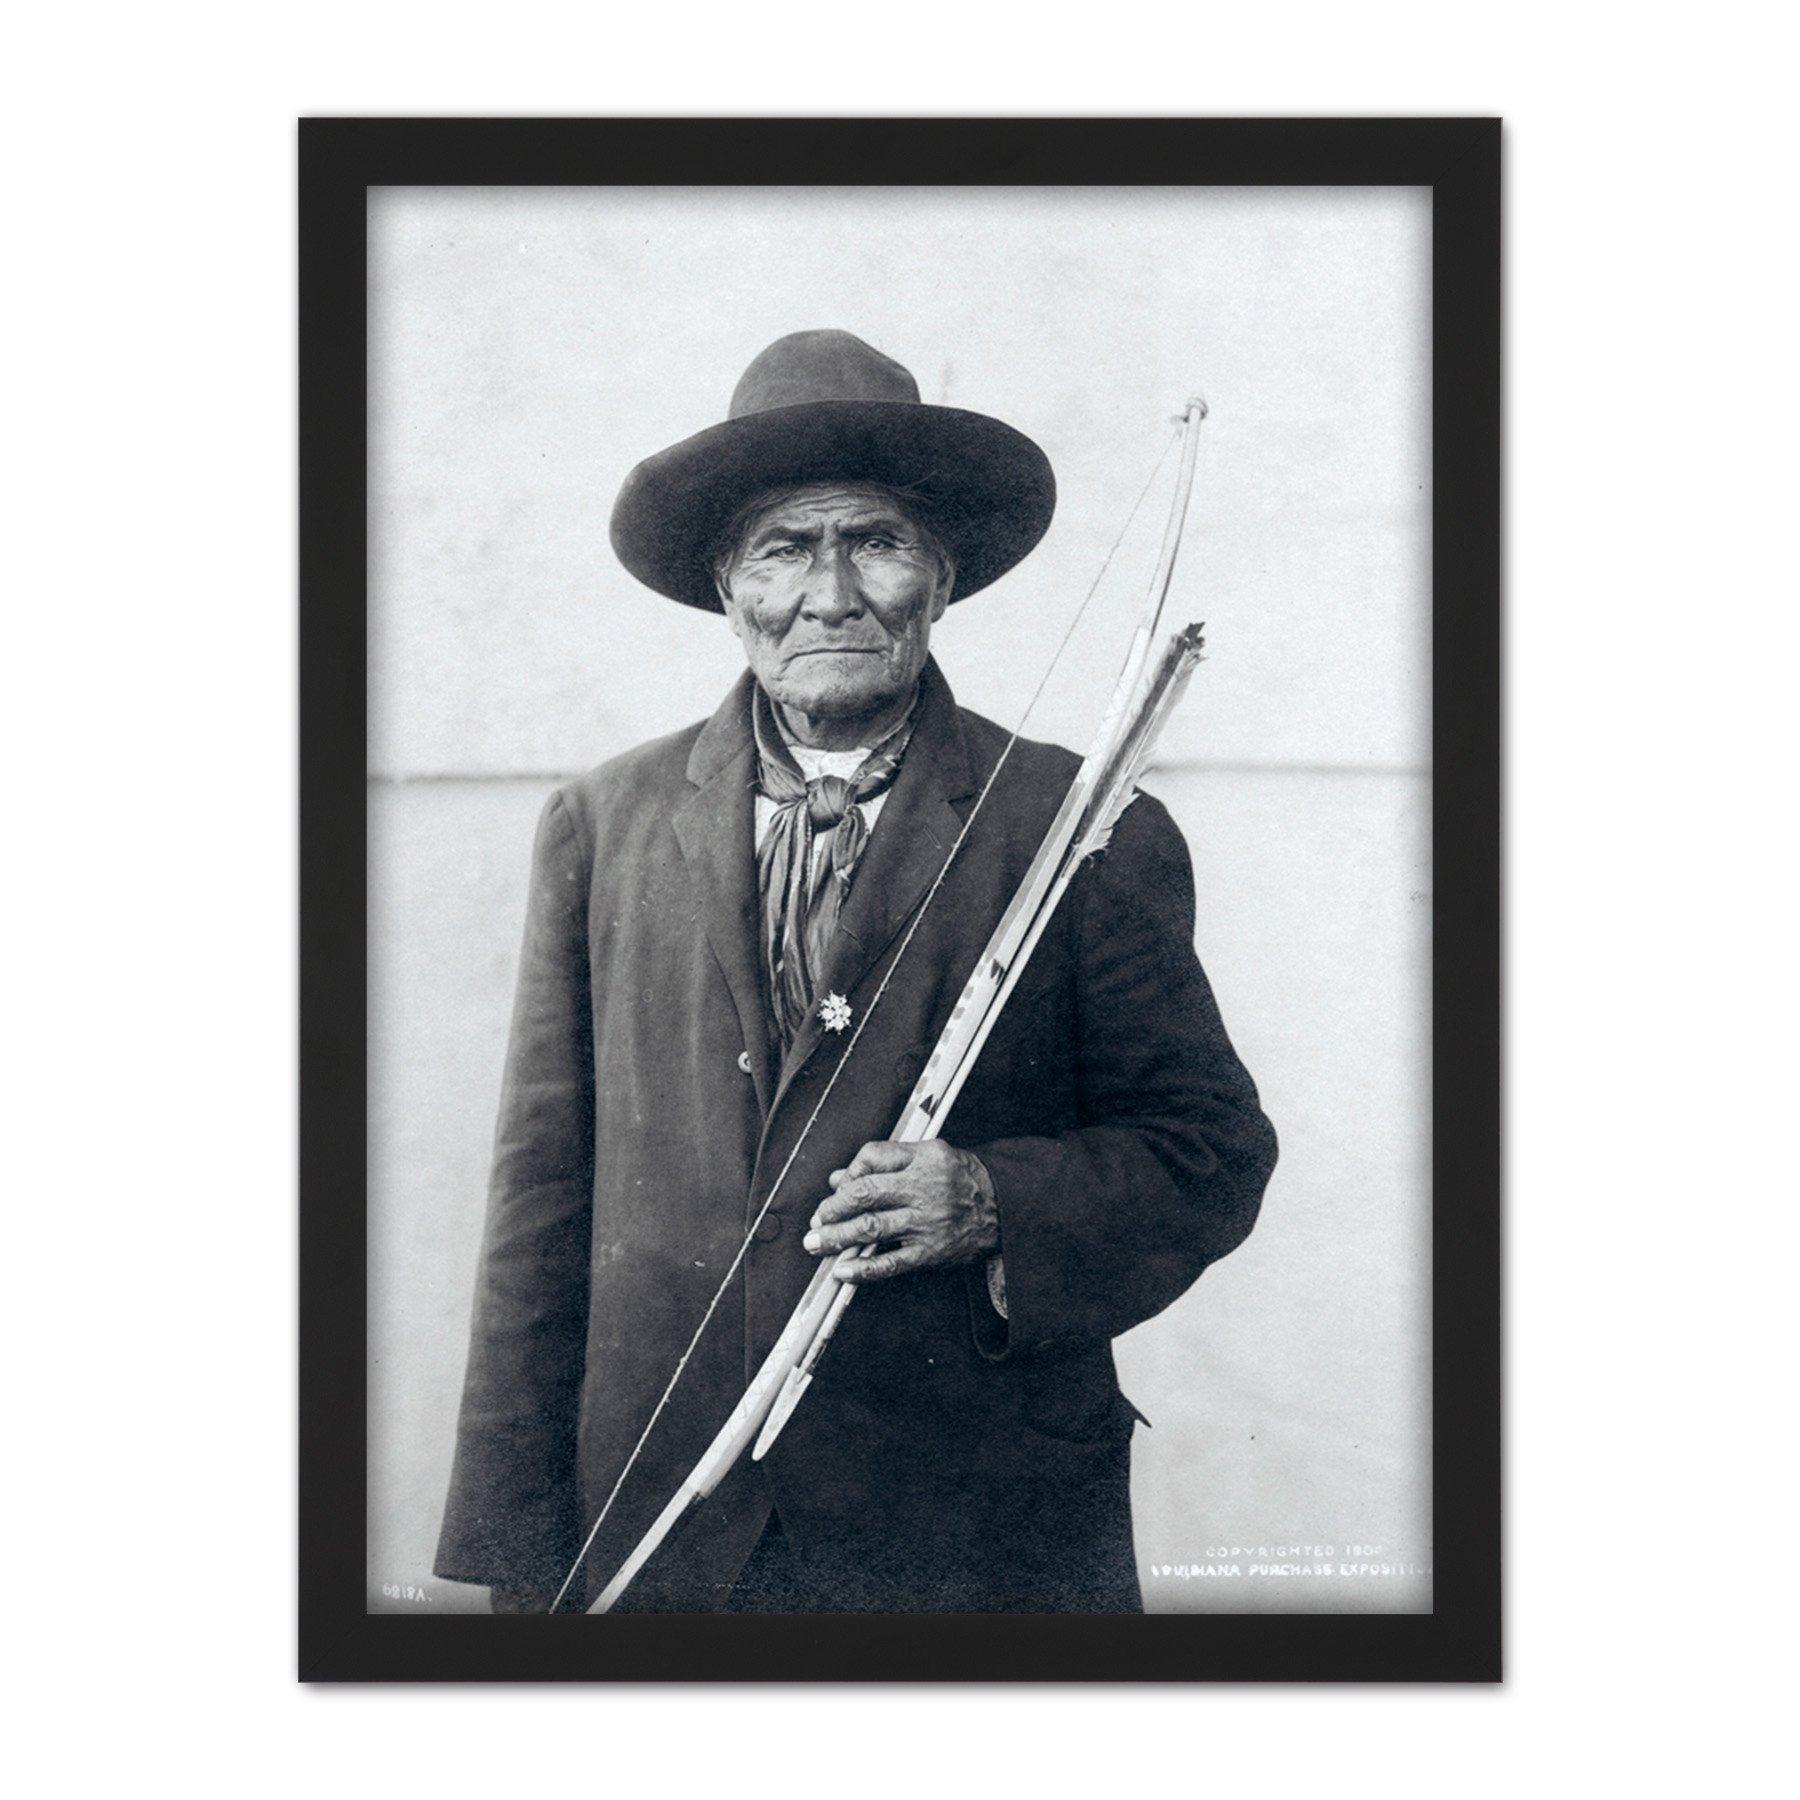 Geronimo Apache Chief Native American Vintage BW Photo Large Framed Wall Decor Art Print